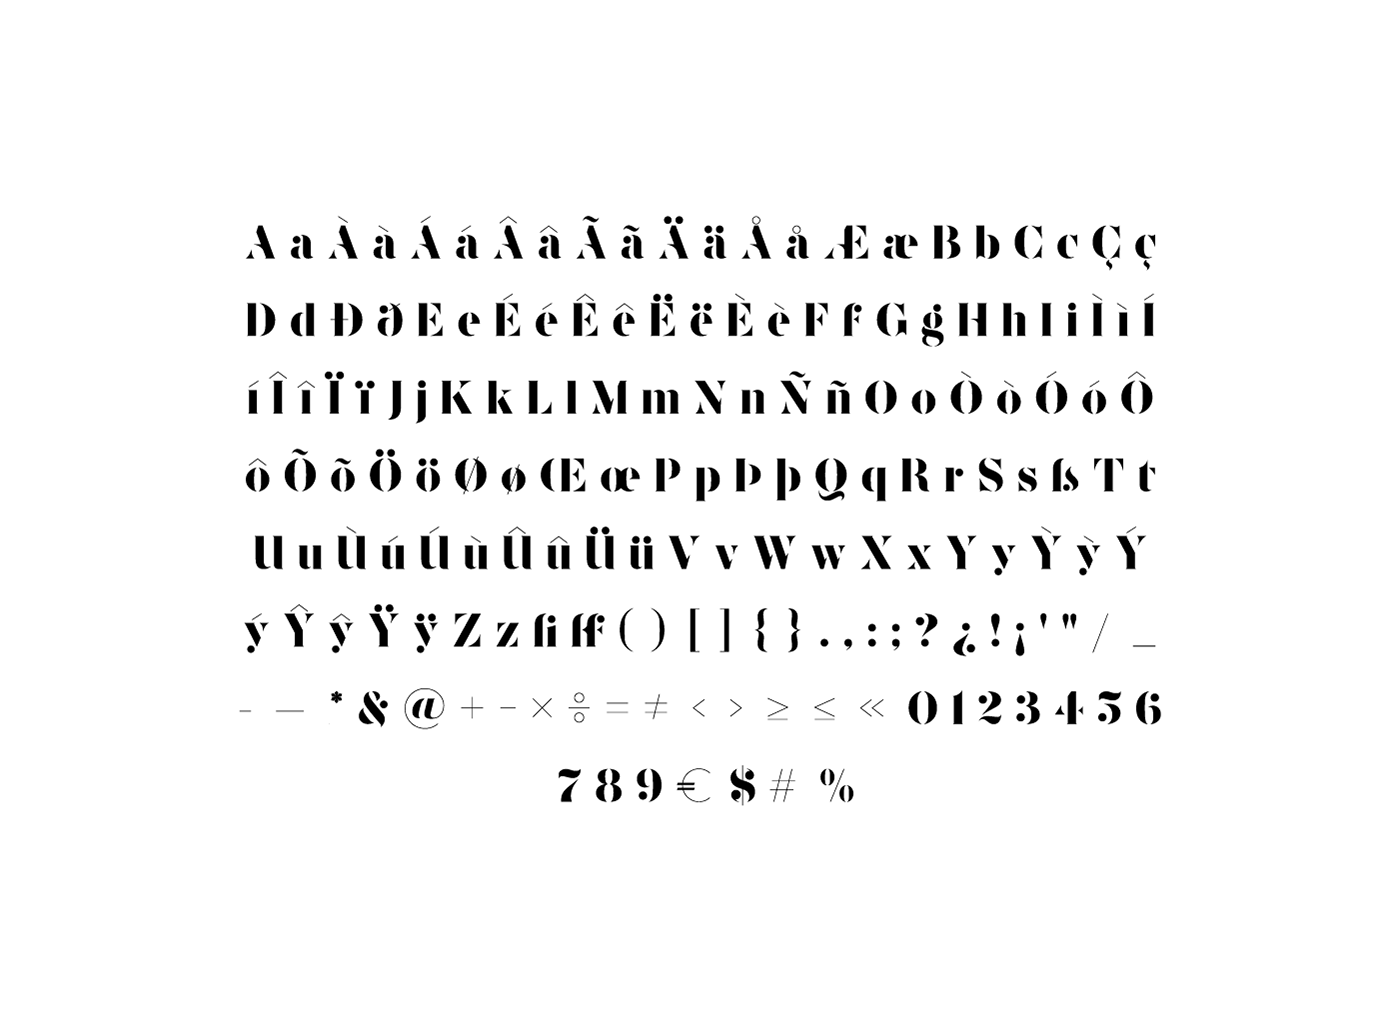 font free download Free font Andrew Herndon Typeface Zefani free typeface Didot bodoni new Typefamily san serif elegant luxury